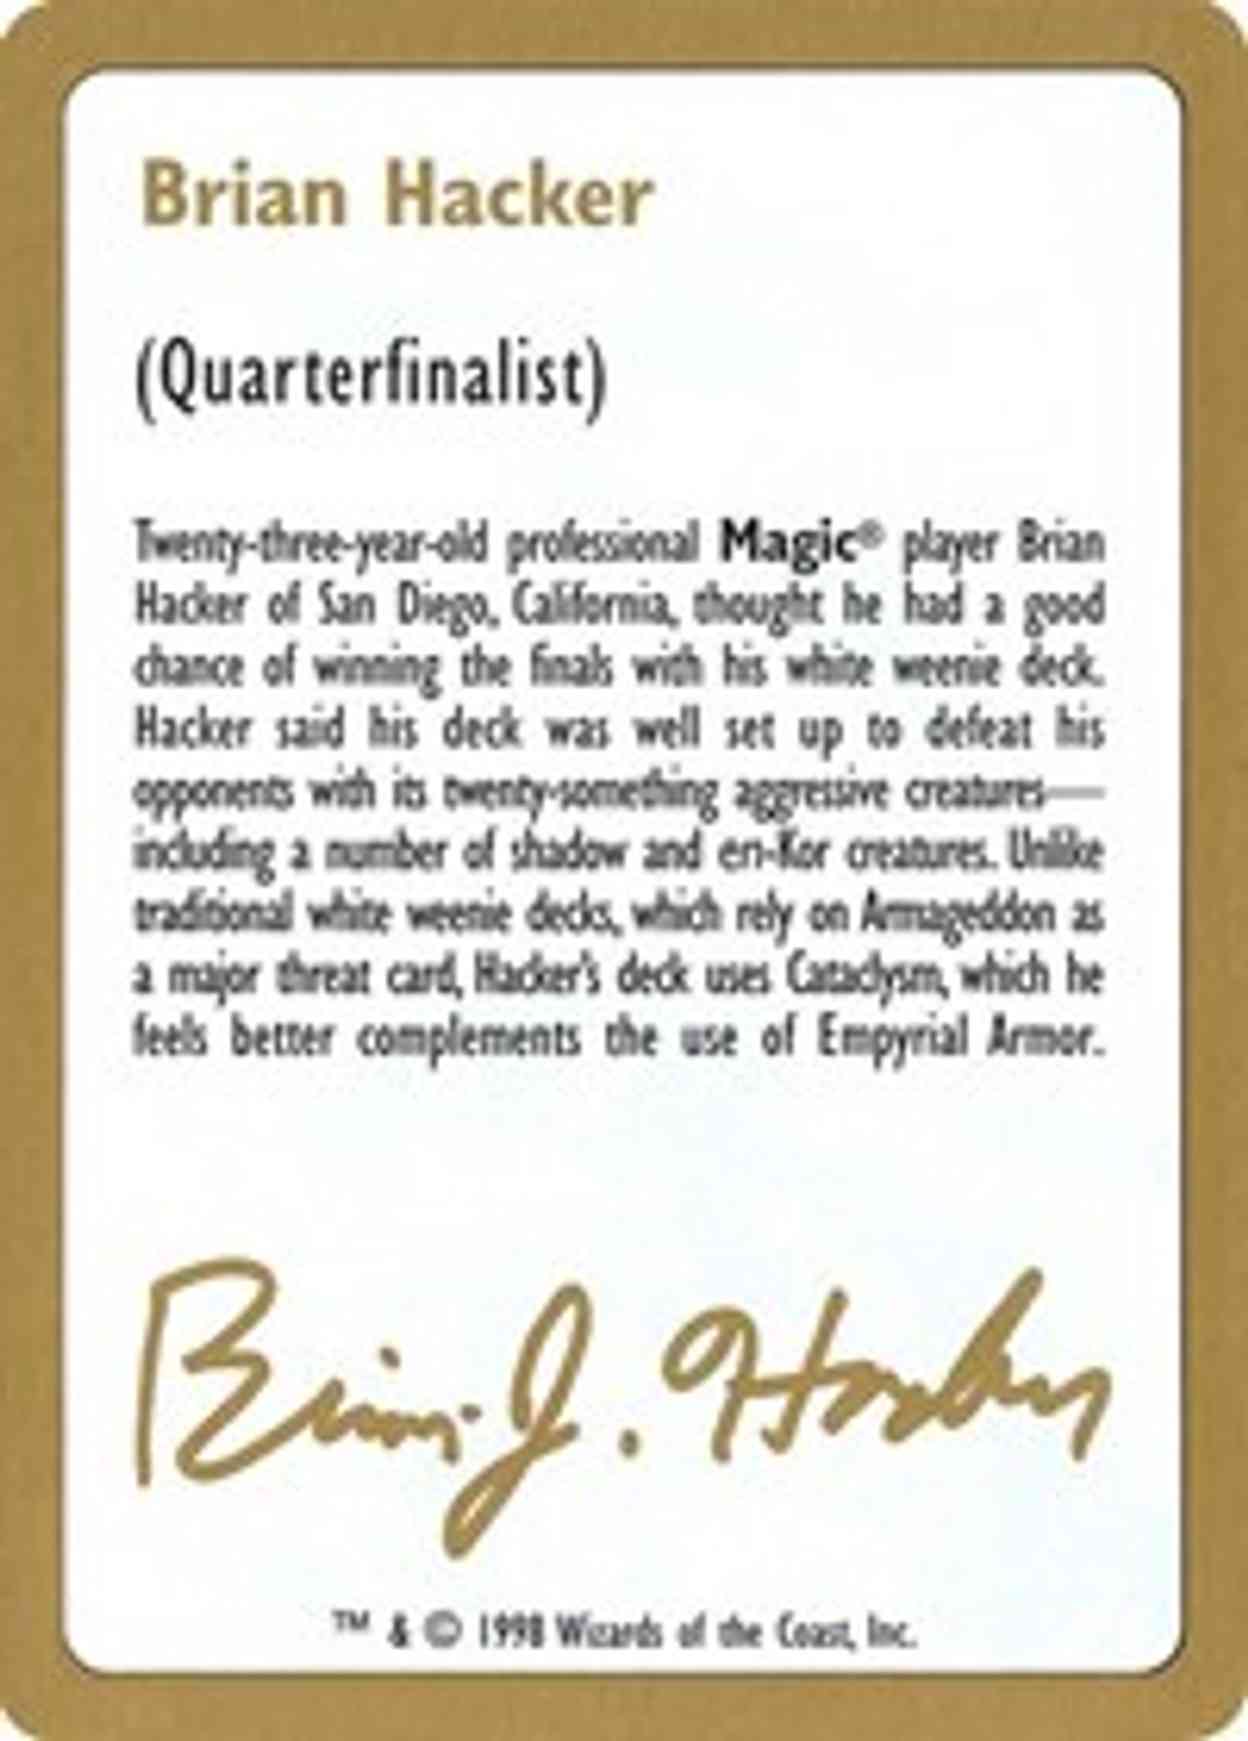 1998 Brian Hacker Biography Card magic card front